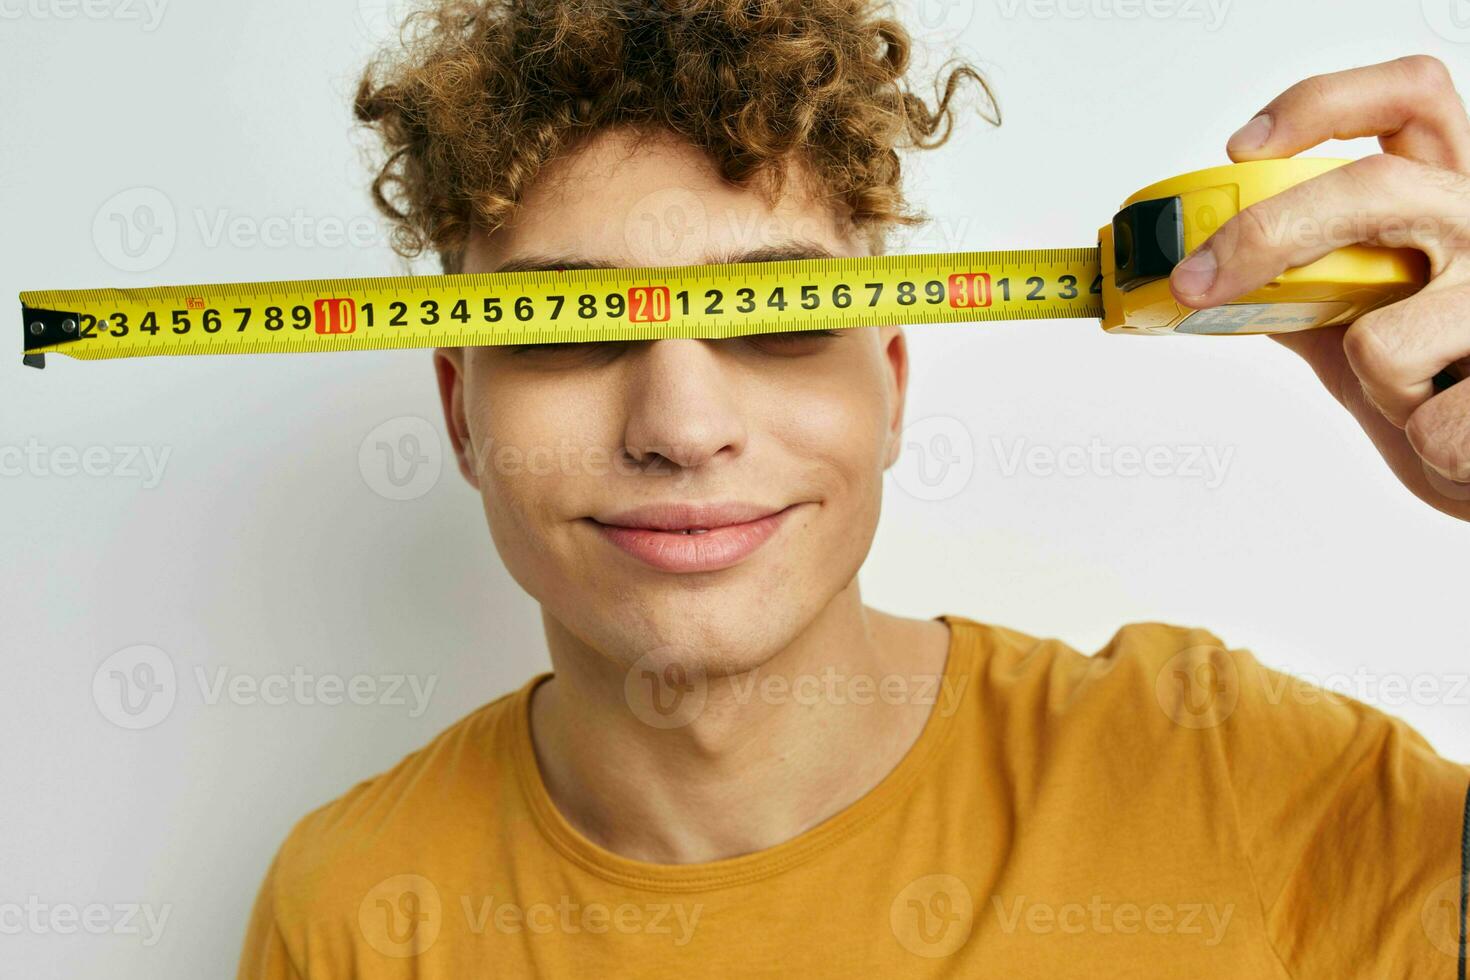 Beau gars mesure ruban mesure dans Jaune T-shirt lumière Contexte photo